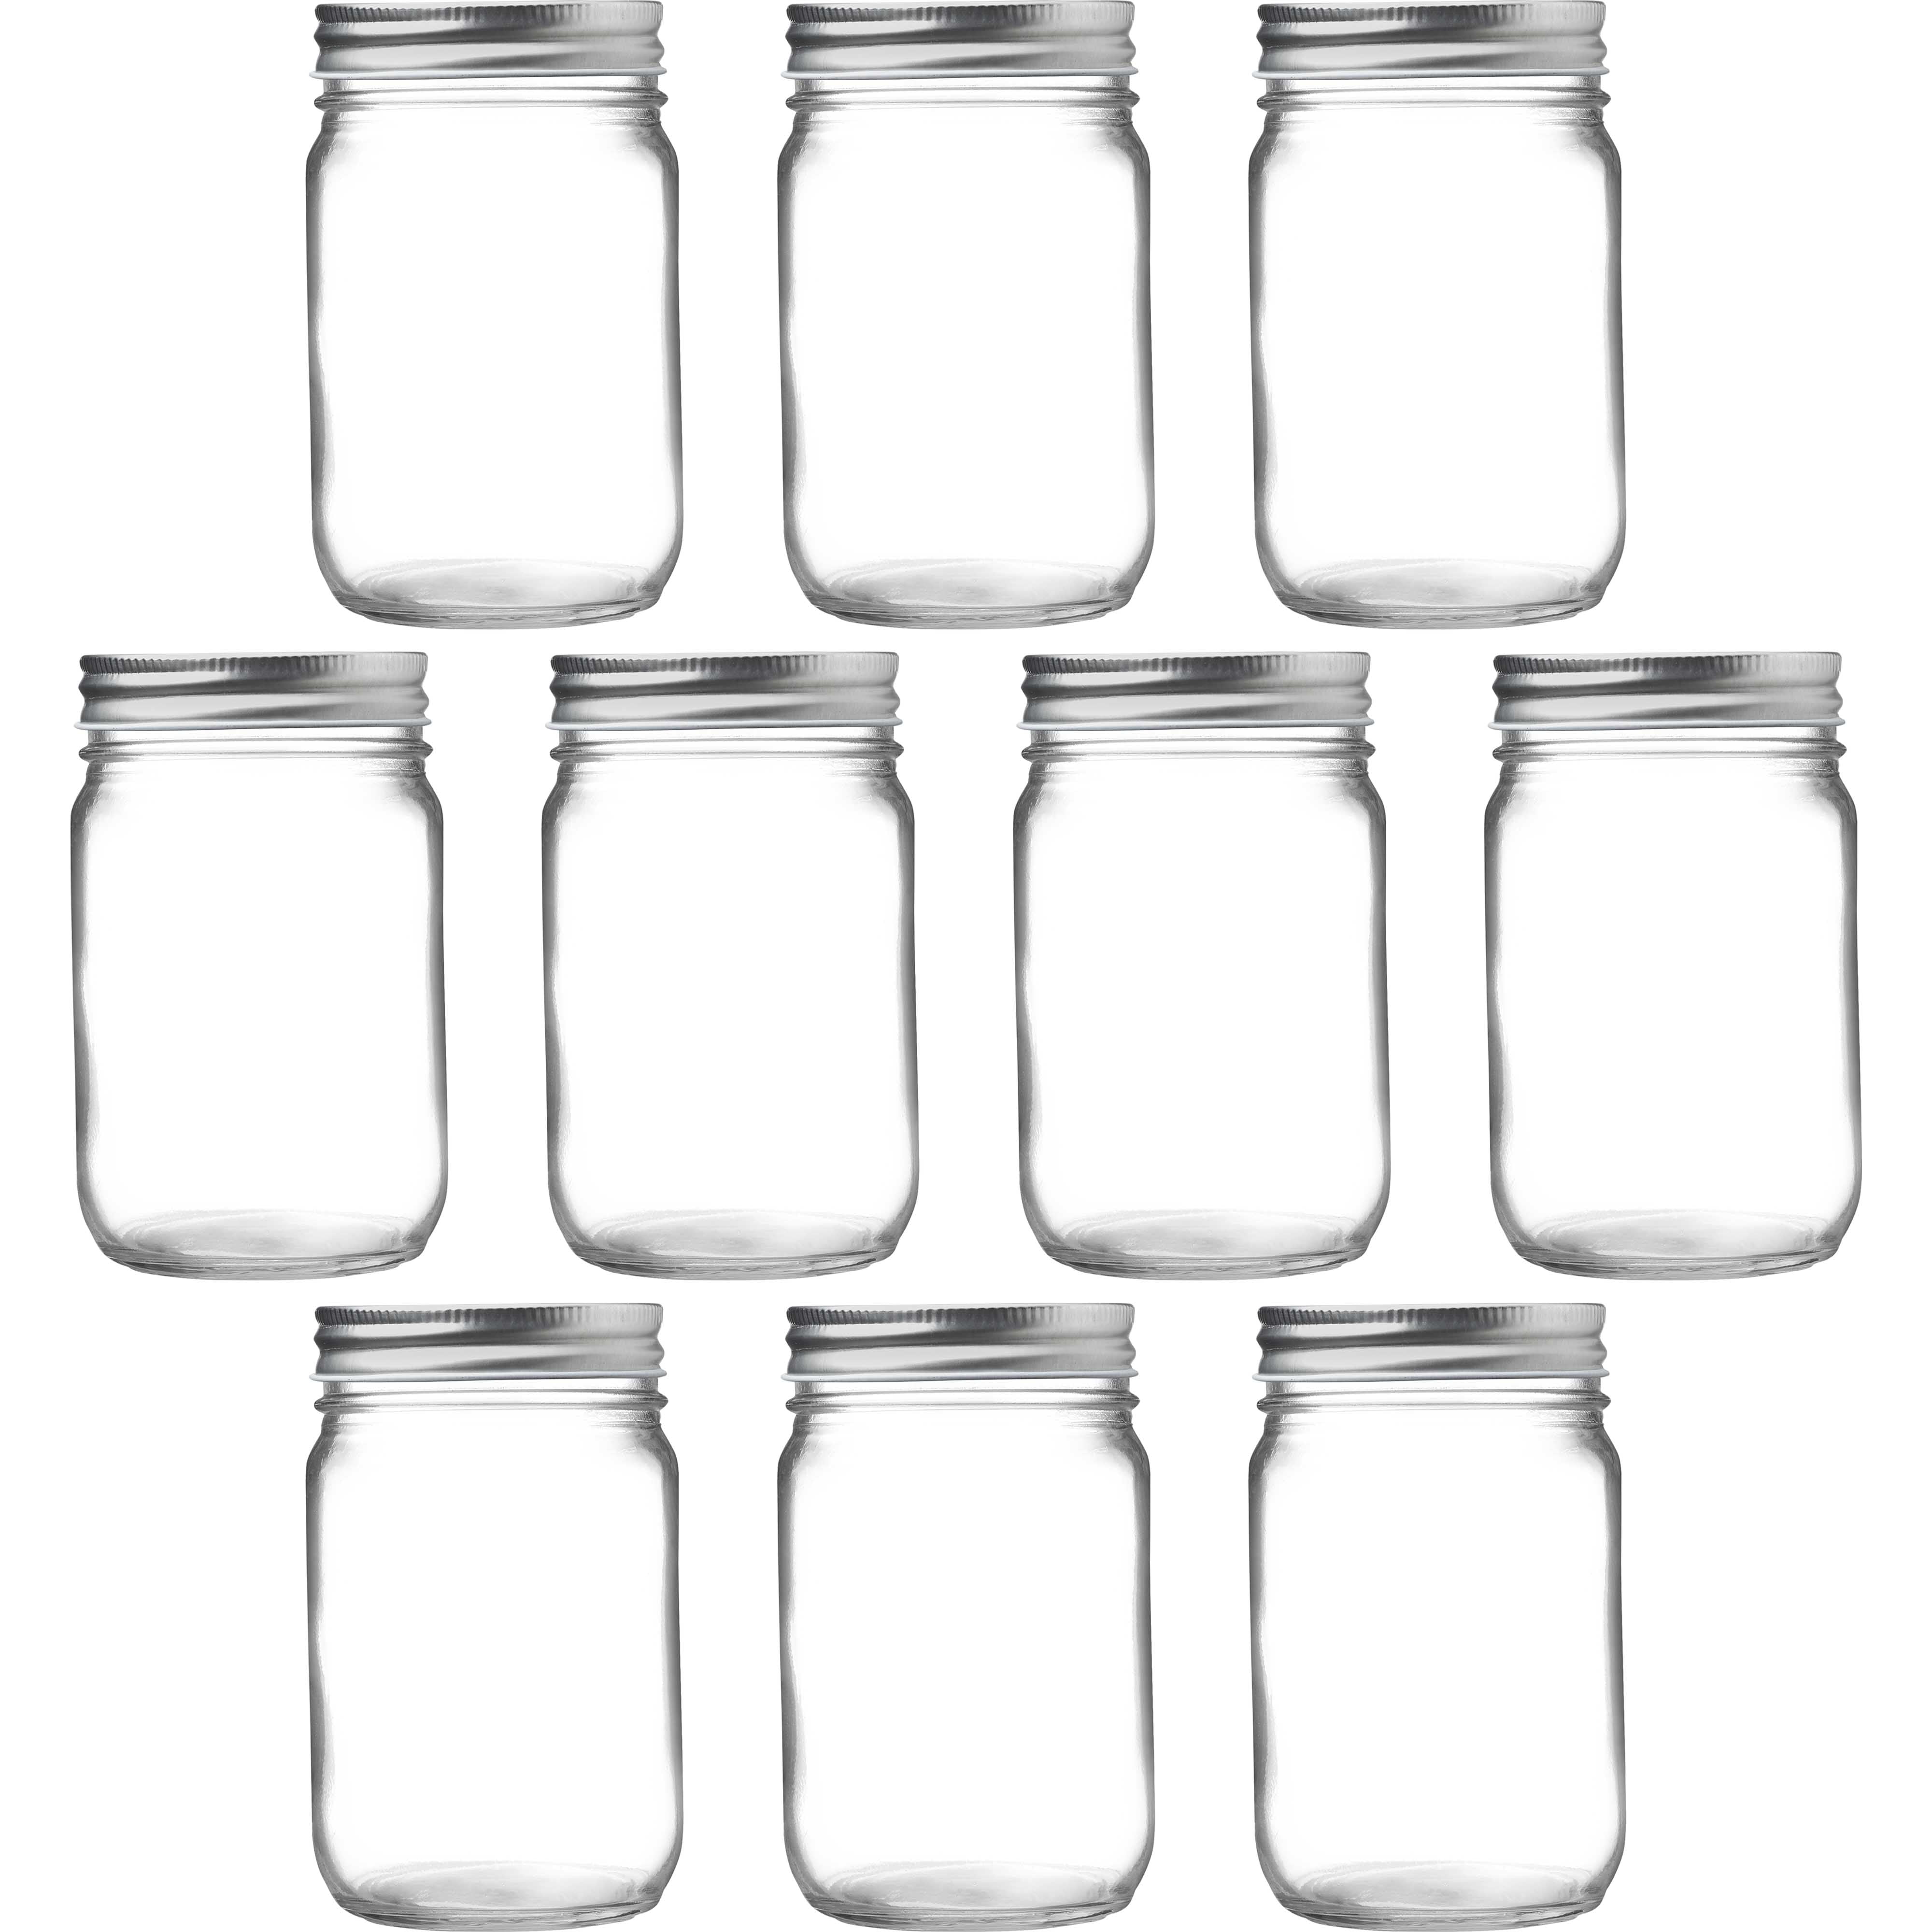 12 Plastic Mason Jars with Lids, Assorted Sizes –